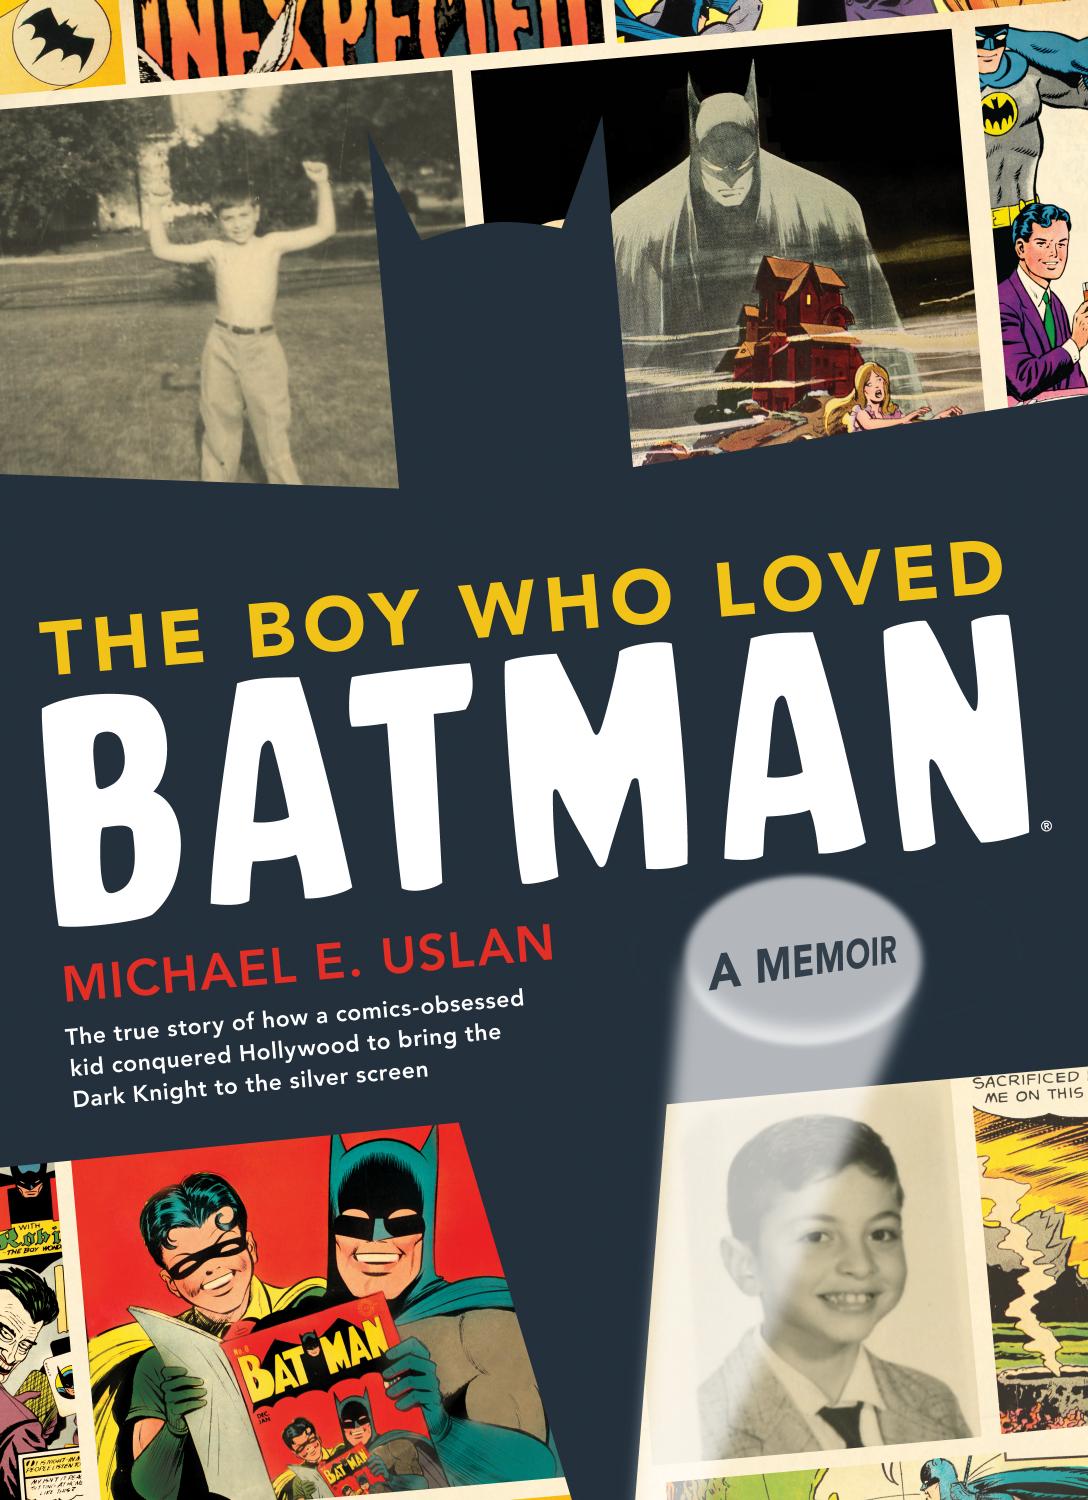 The Boy Who Loved Batman by Michael Uslan